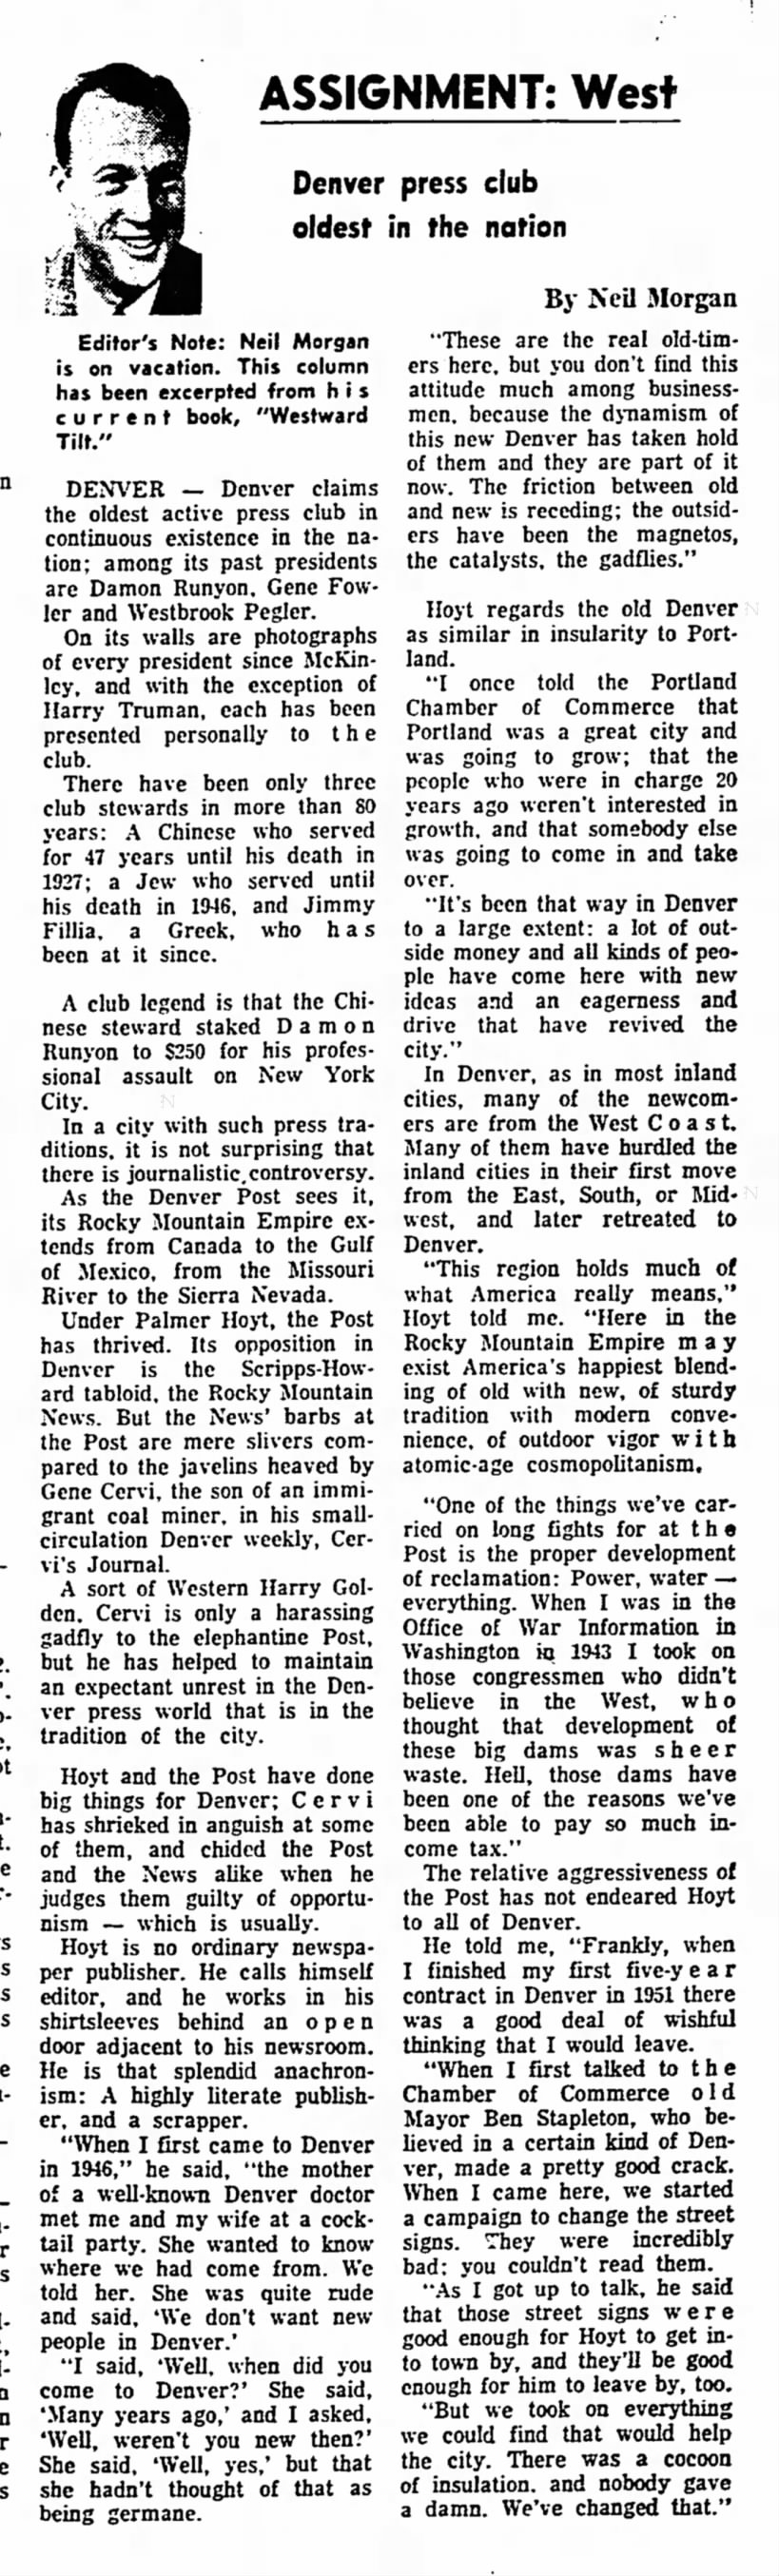 Redlands Daily Facts
(Redlands, California)
19 October 1963, p 10